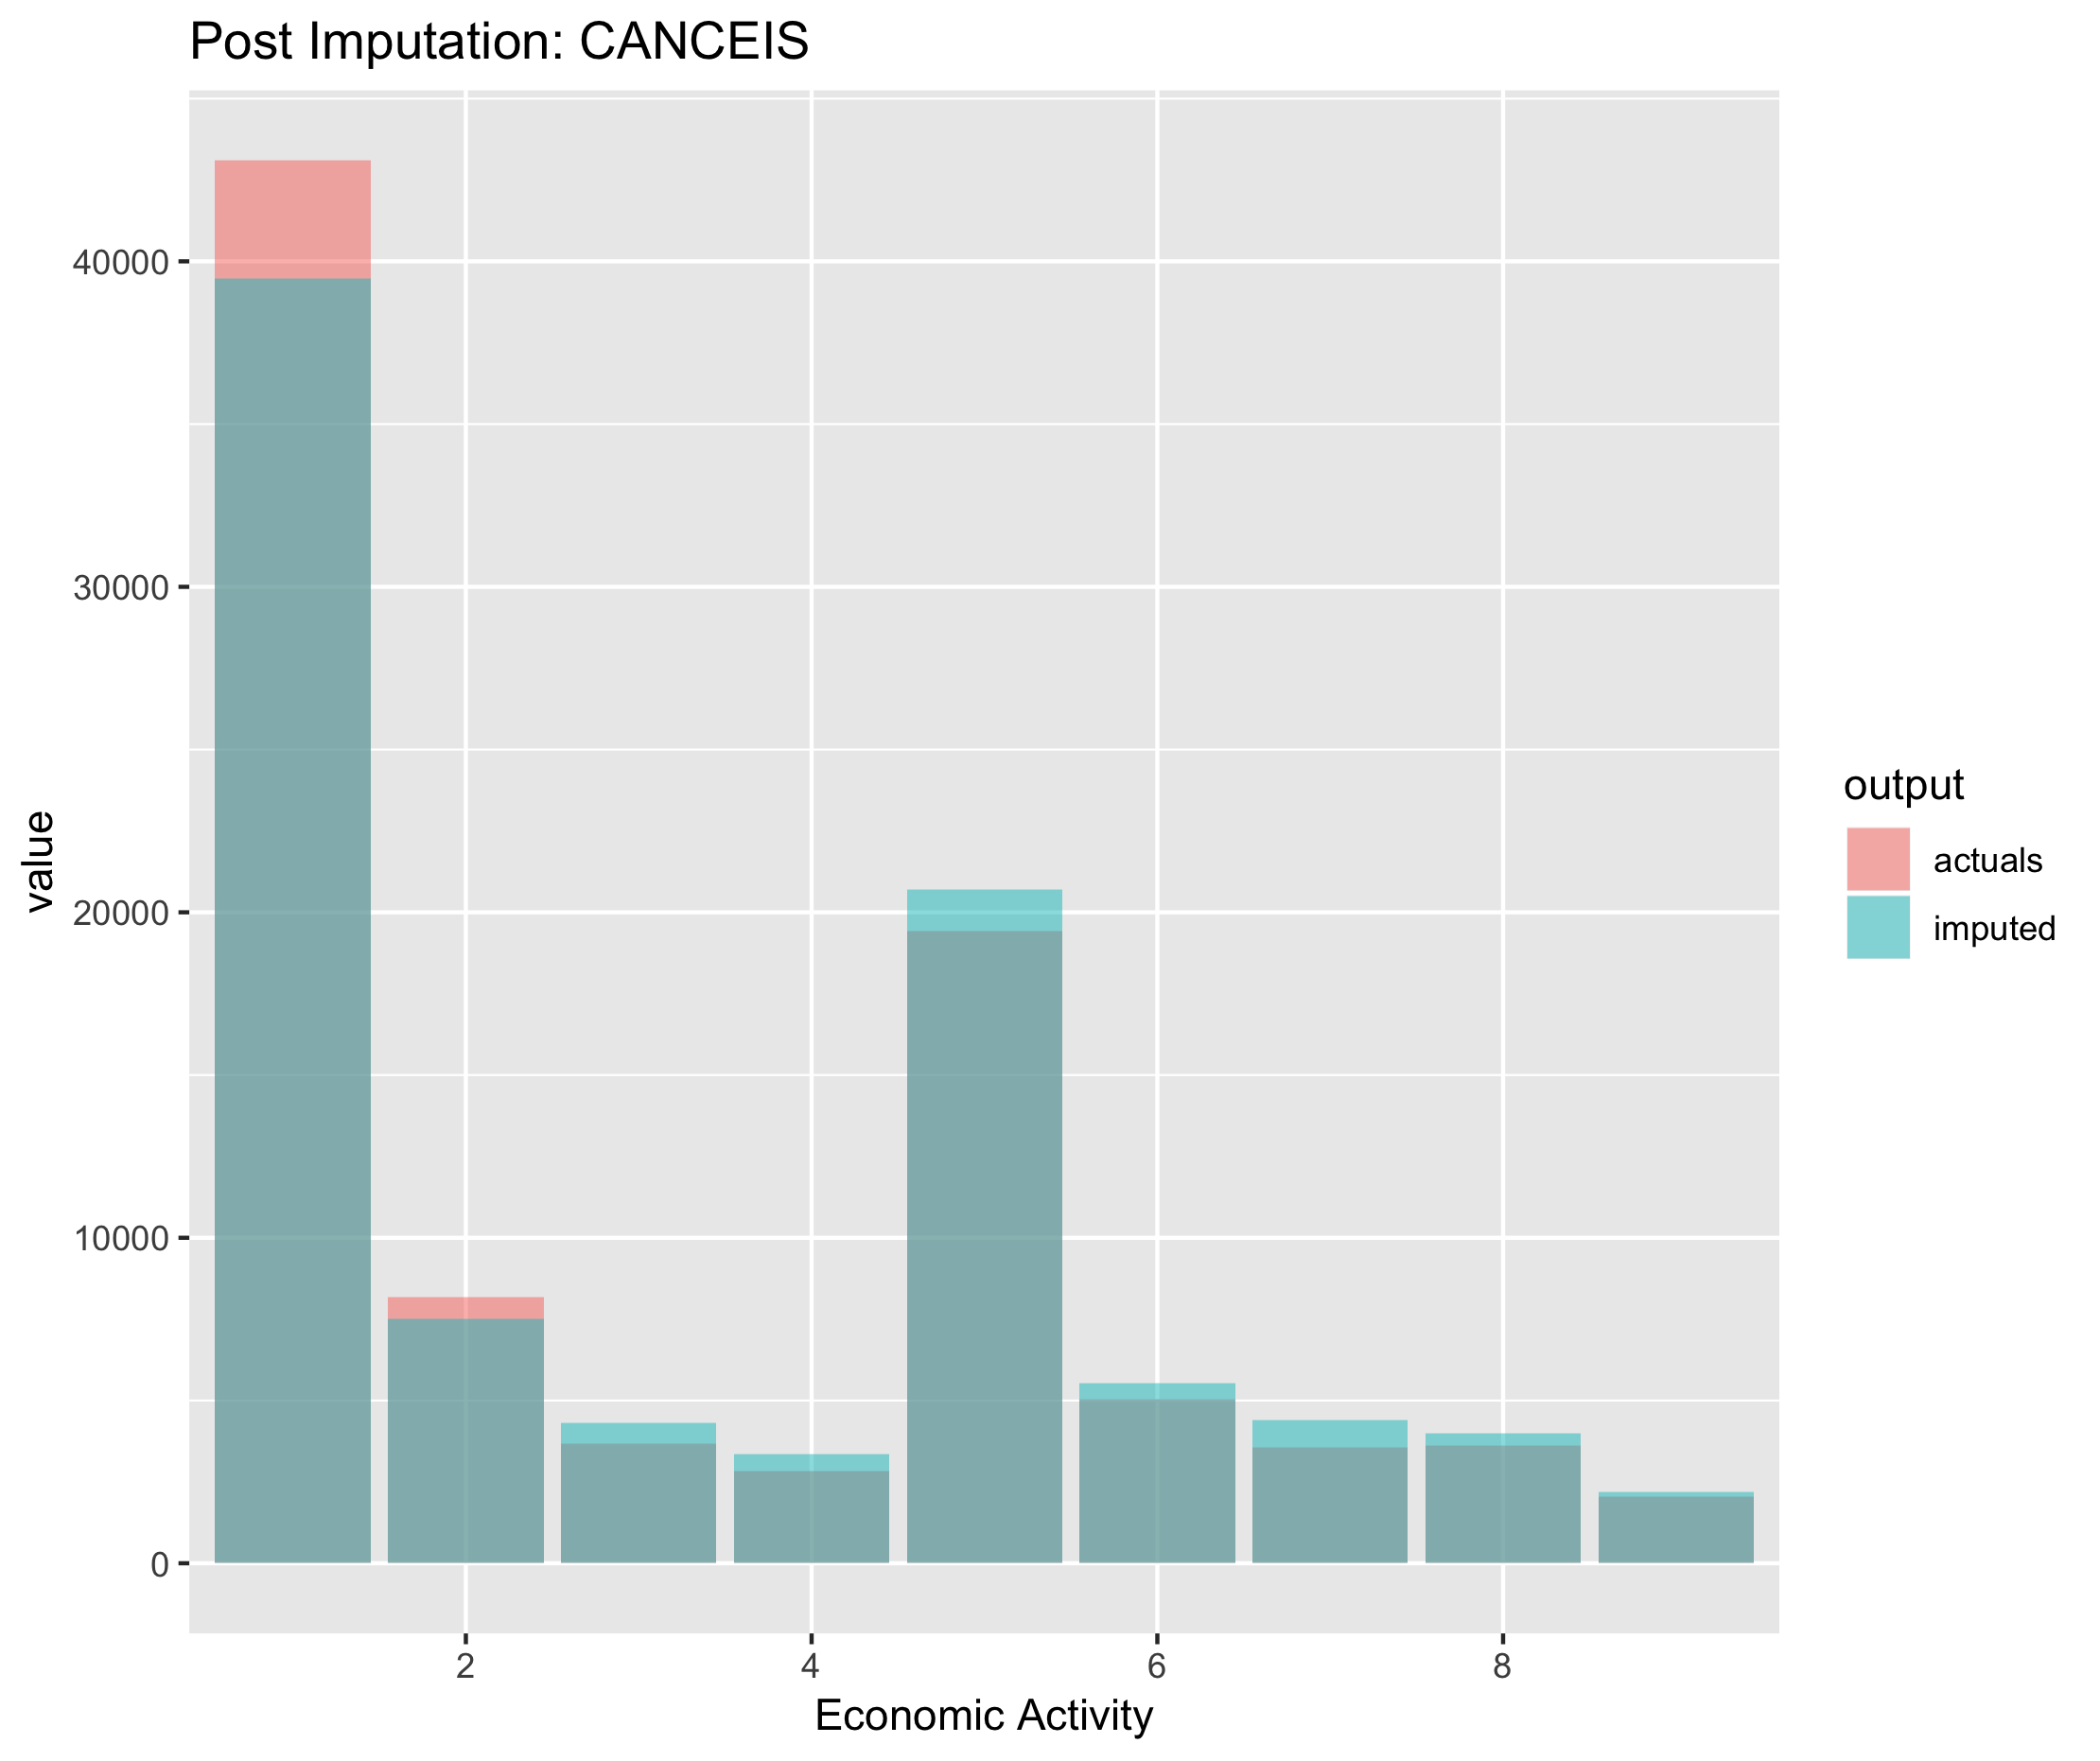 Figure 6.8. Post imputation distribution of economic activity using CANCEIS imputation